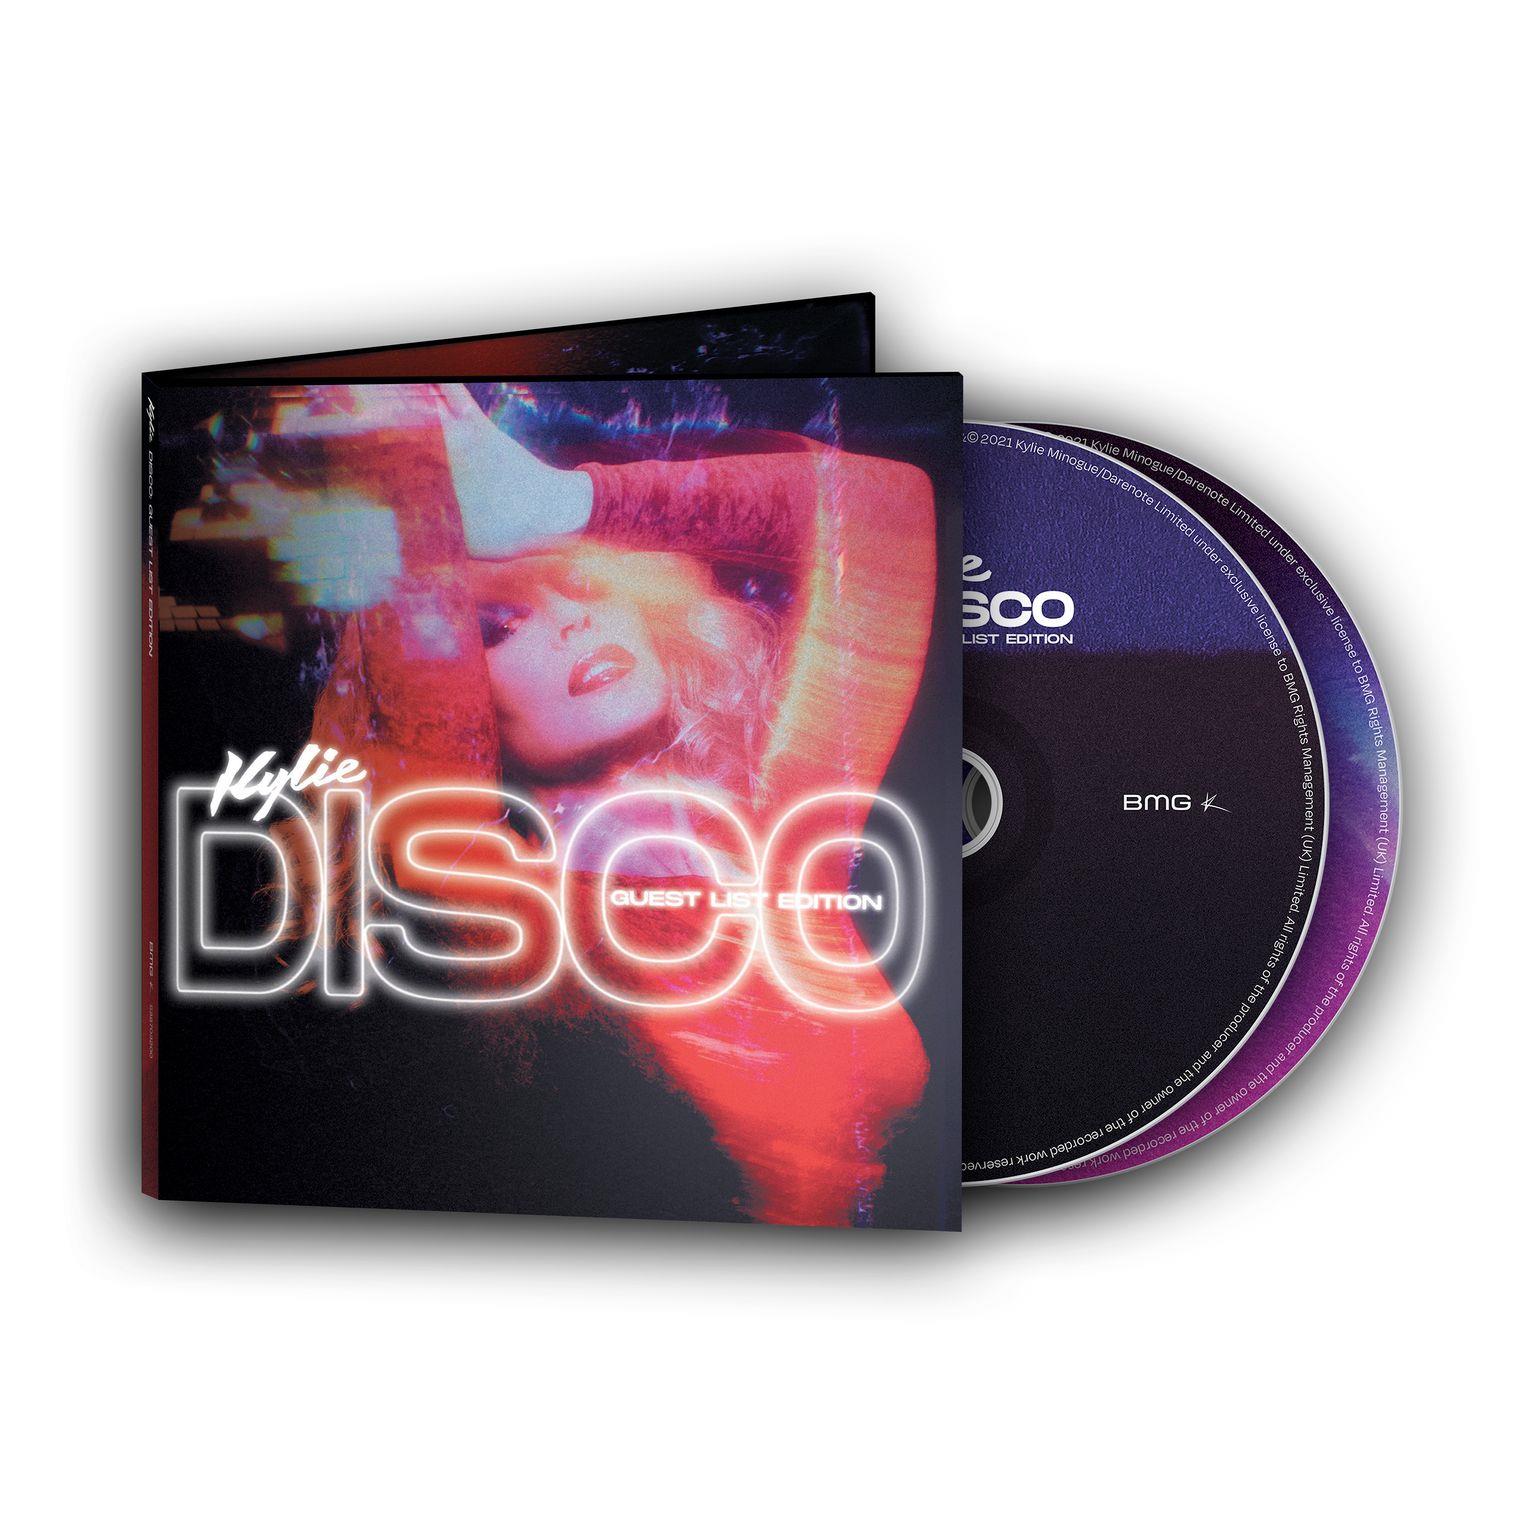 Minogue kylie disco. Kylie Minogue "Disco, CD". Kylie Minogue - Infinite Disco (2022). Kylie Minogue - Disco (Guest list Edition) 3 LP'S.